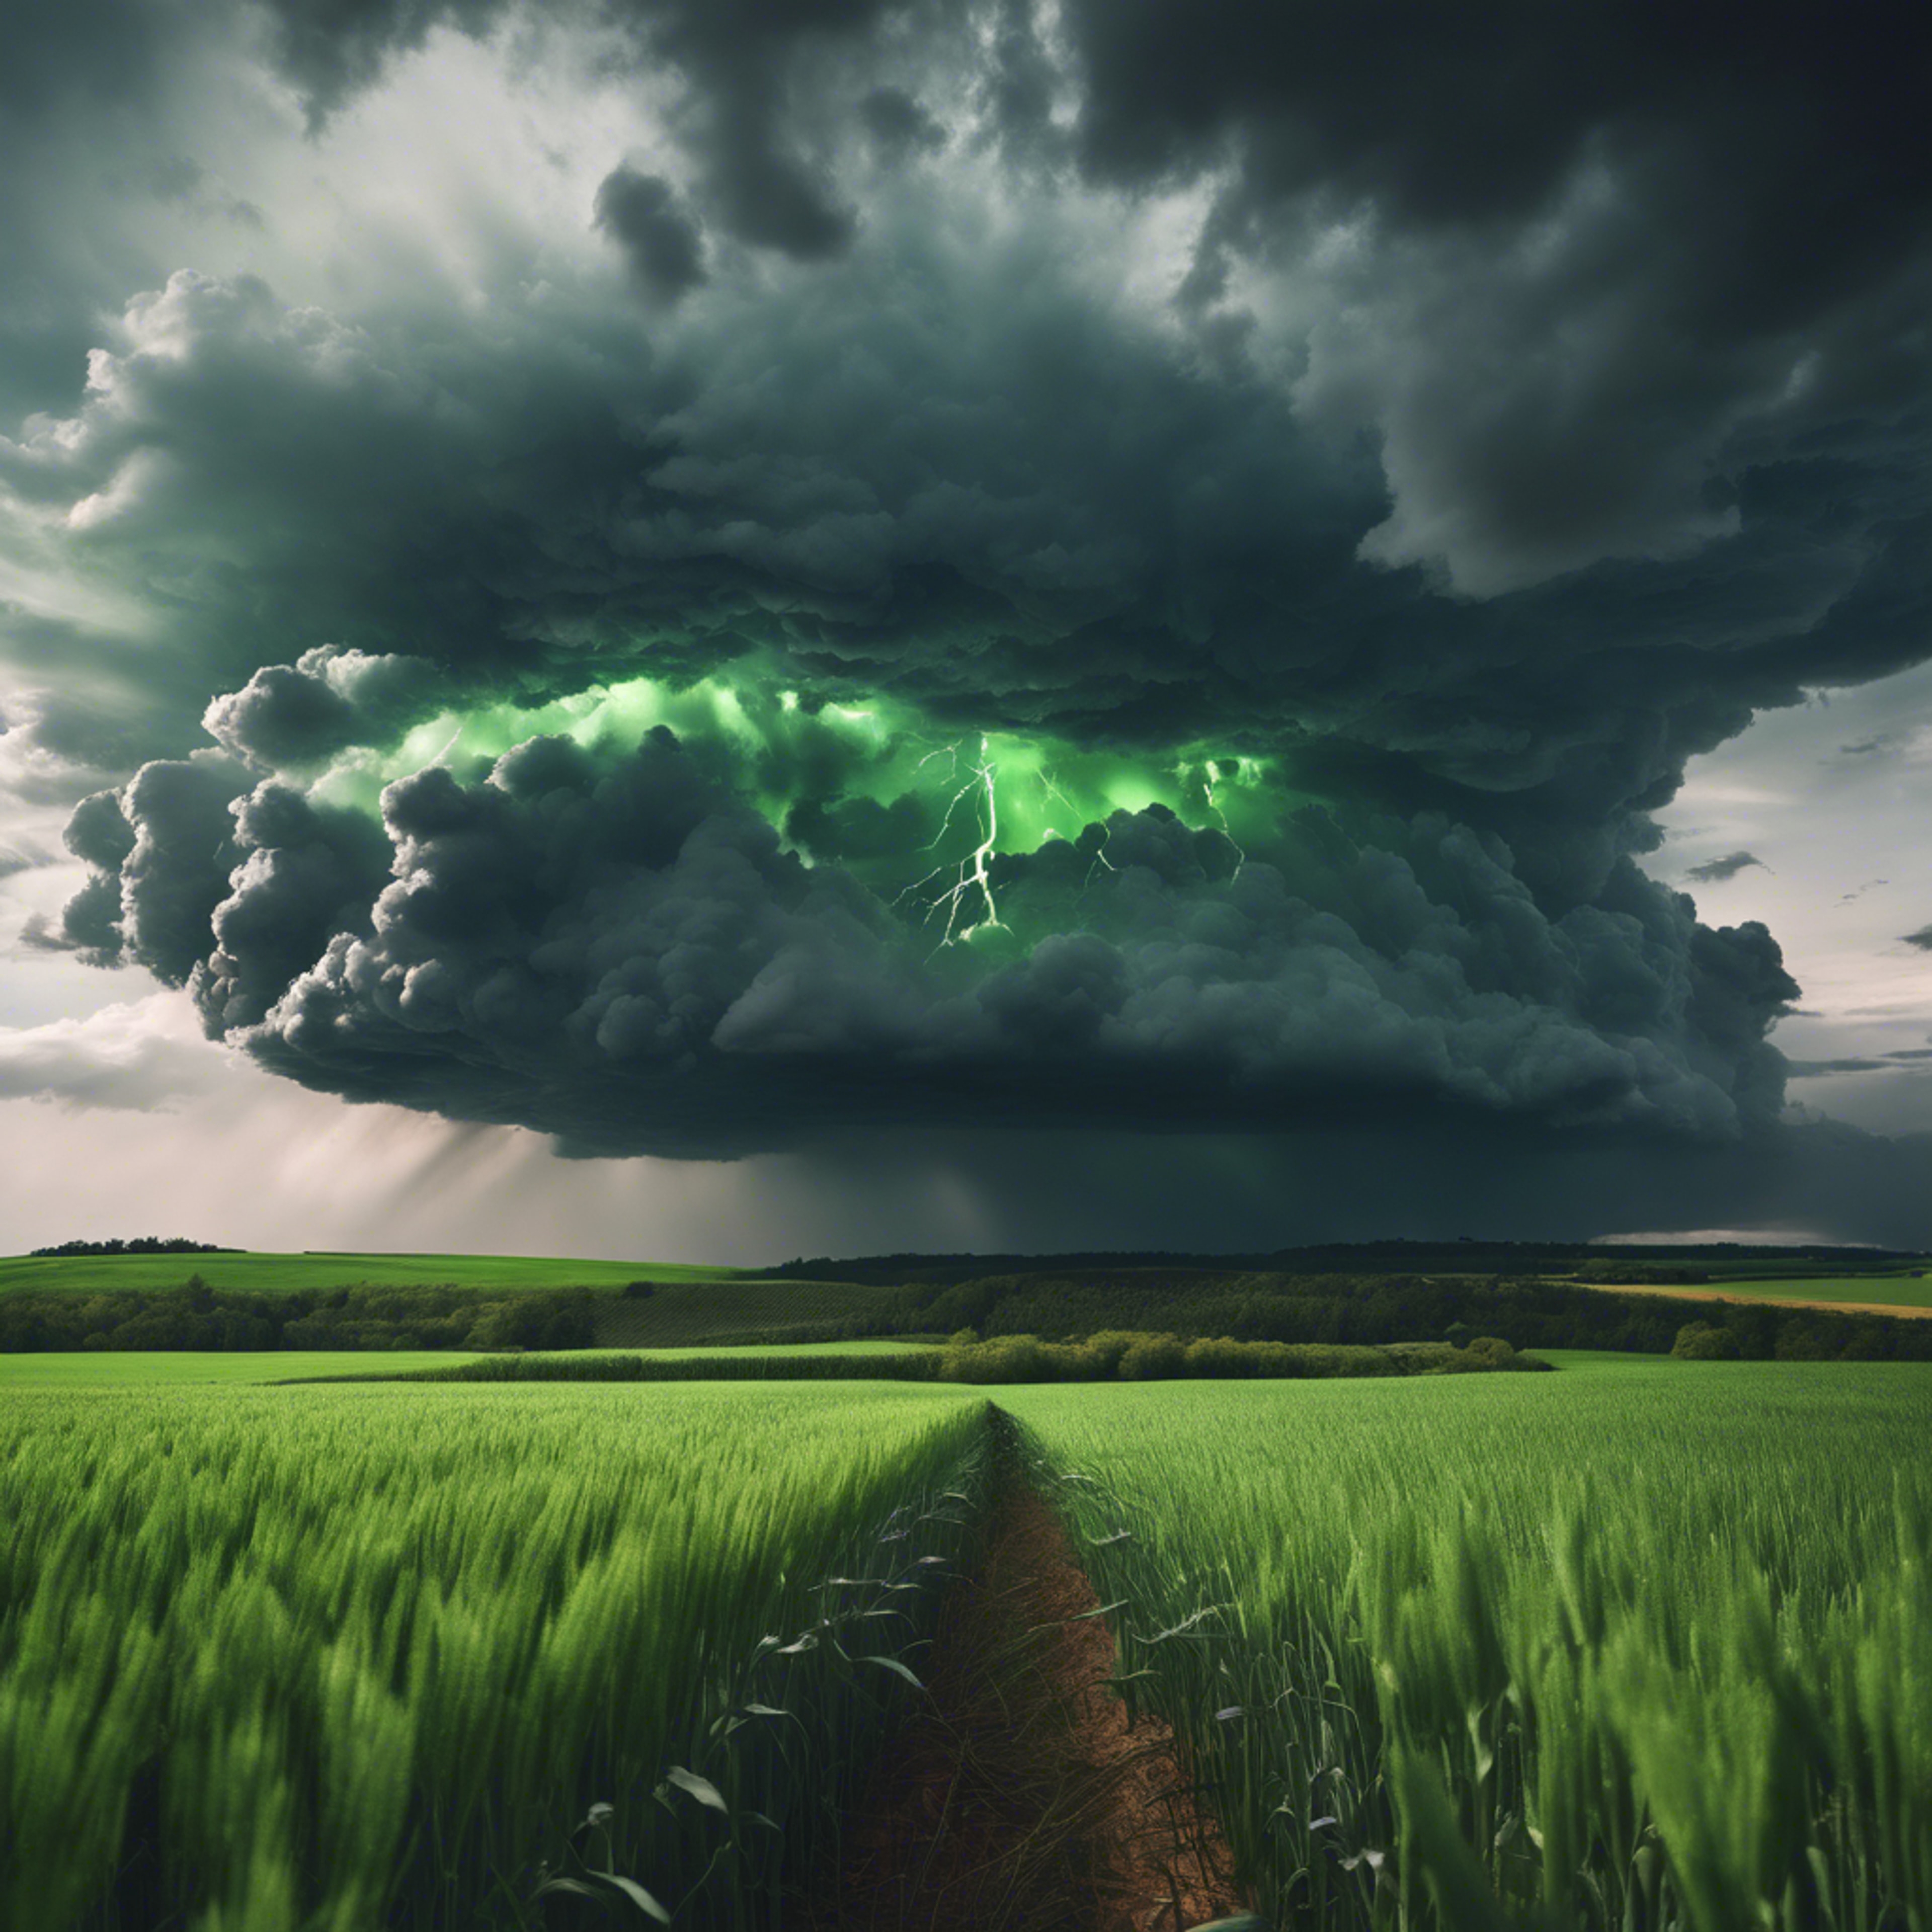 A dramatic black storm cloud over a vibrant green wheat field. Wallpaper[2ef08a34070042519f8d]